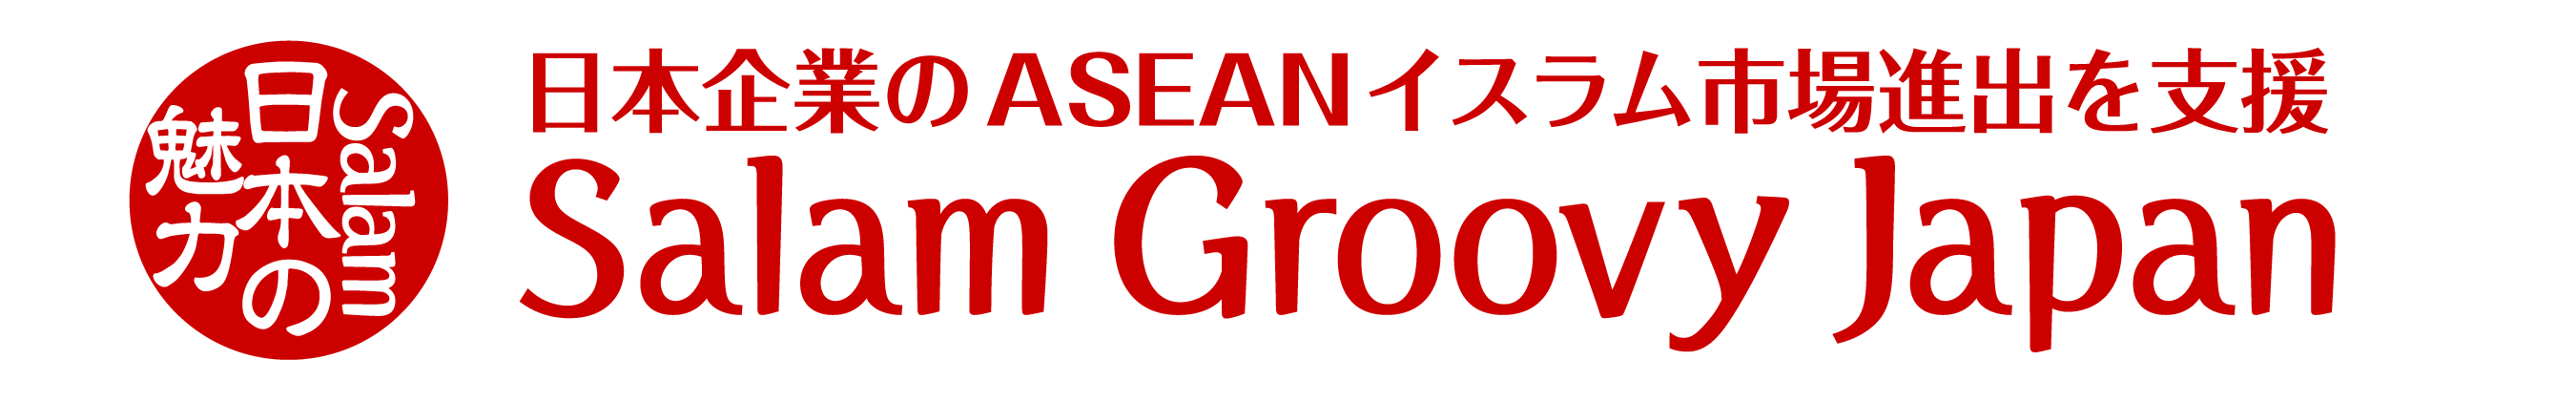 Salam Groovy Japan